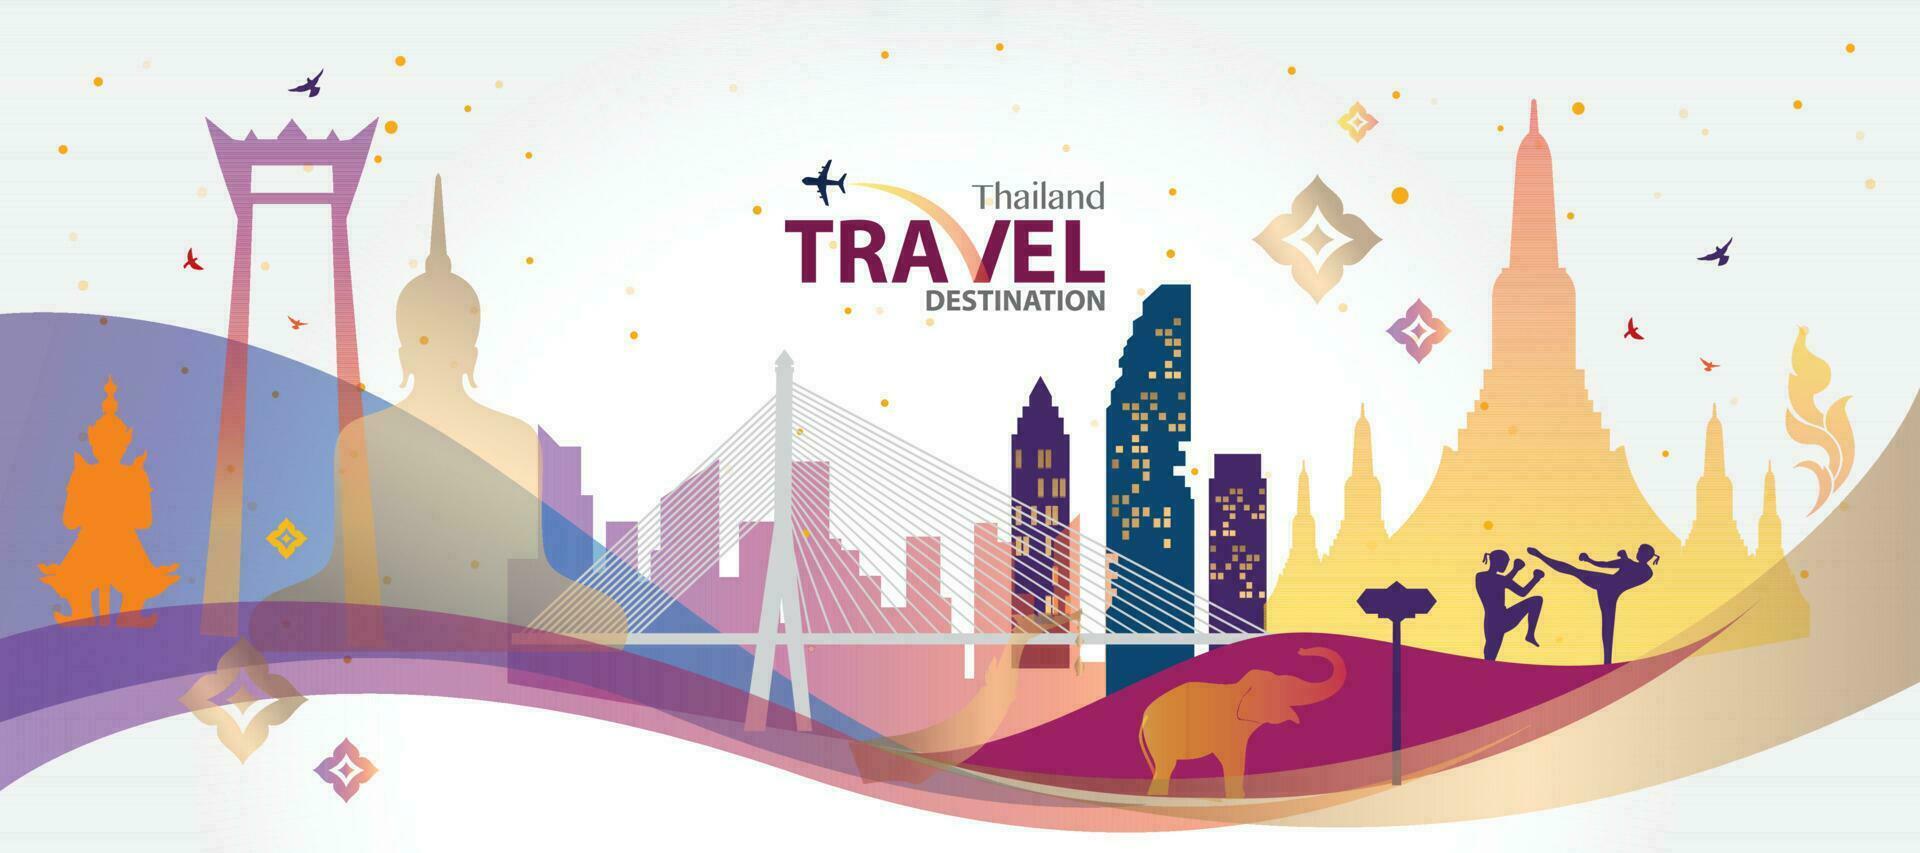 Thailand travel destination vector illustration